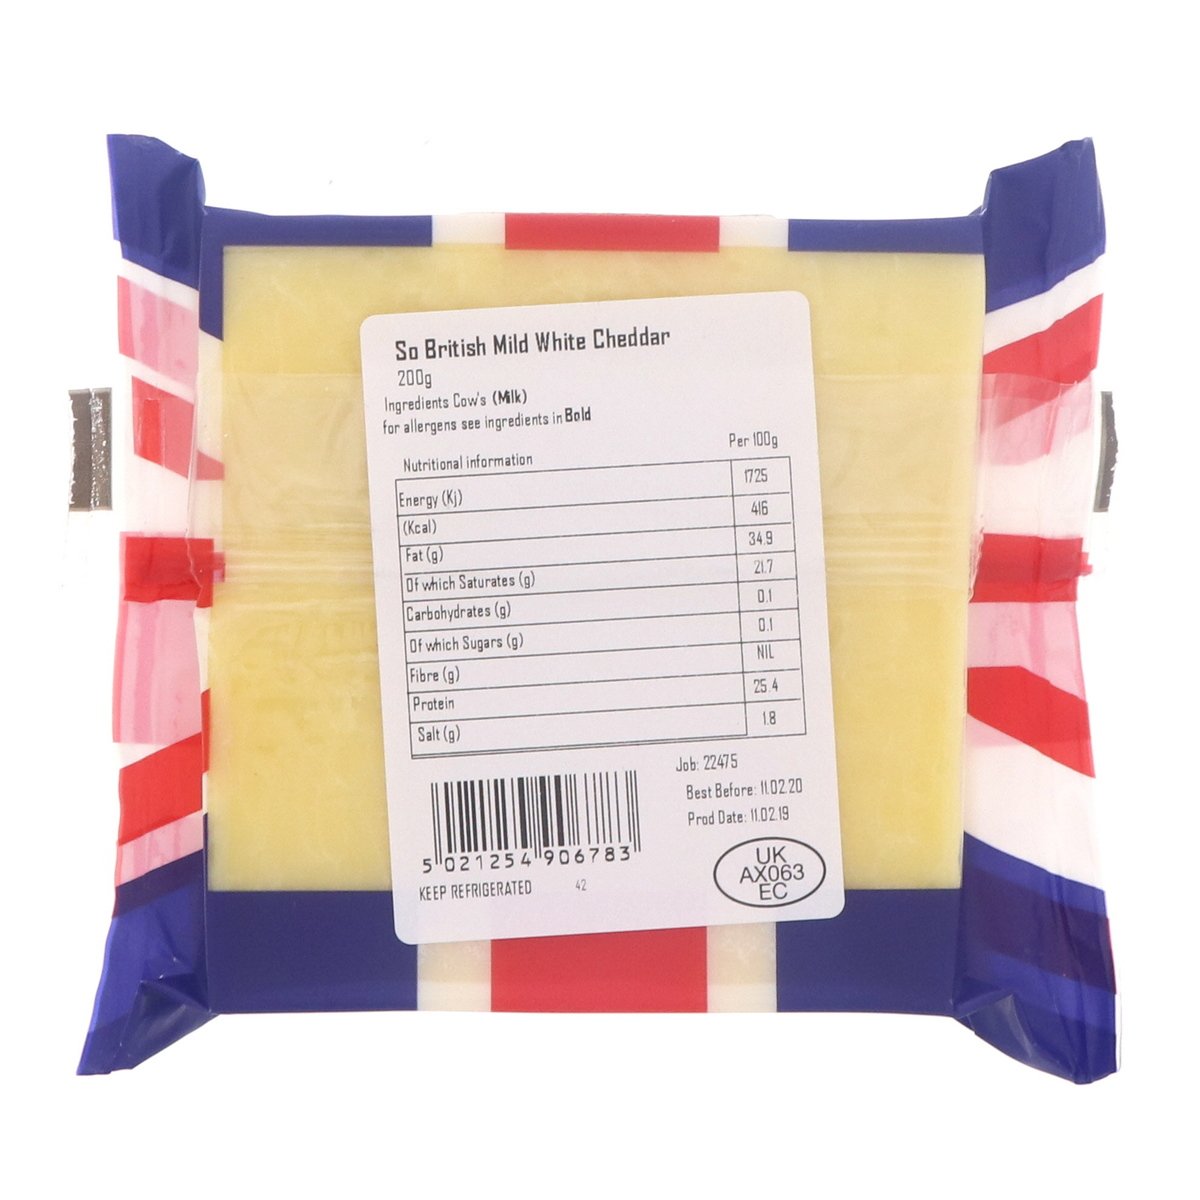 So British Mild White Cheddar Cheese 200 g